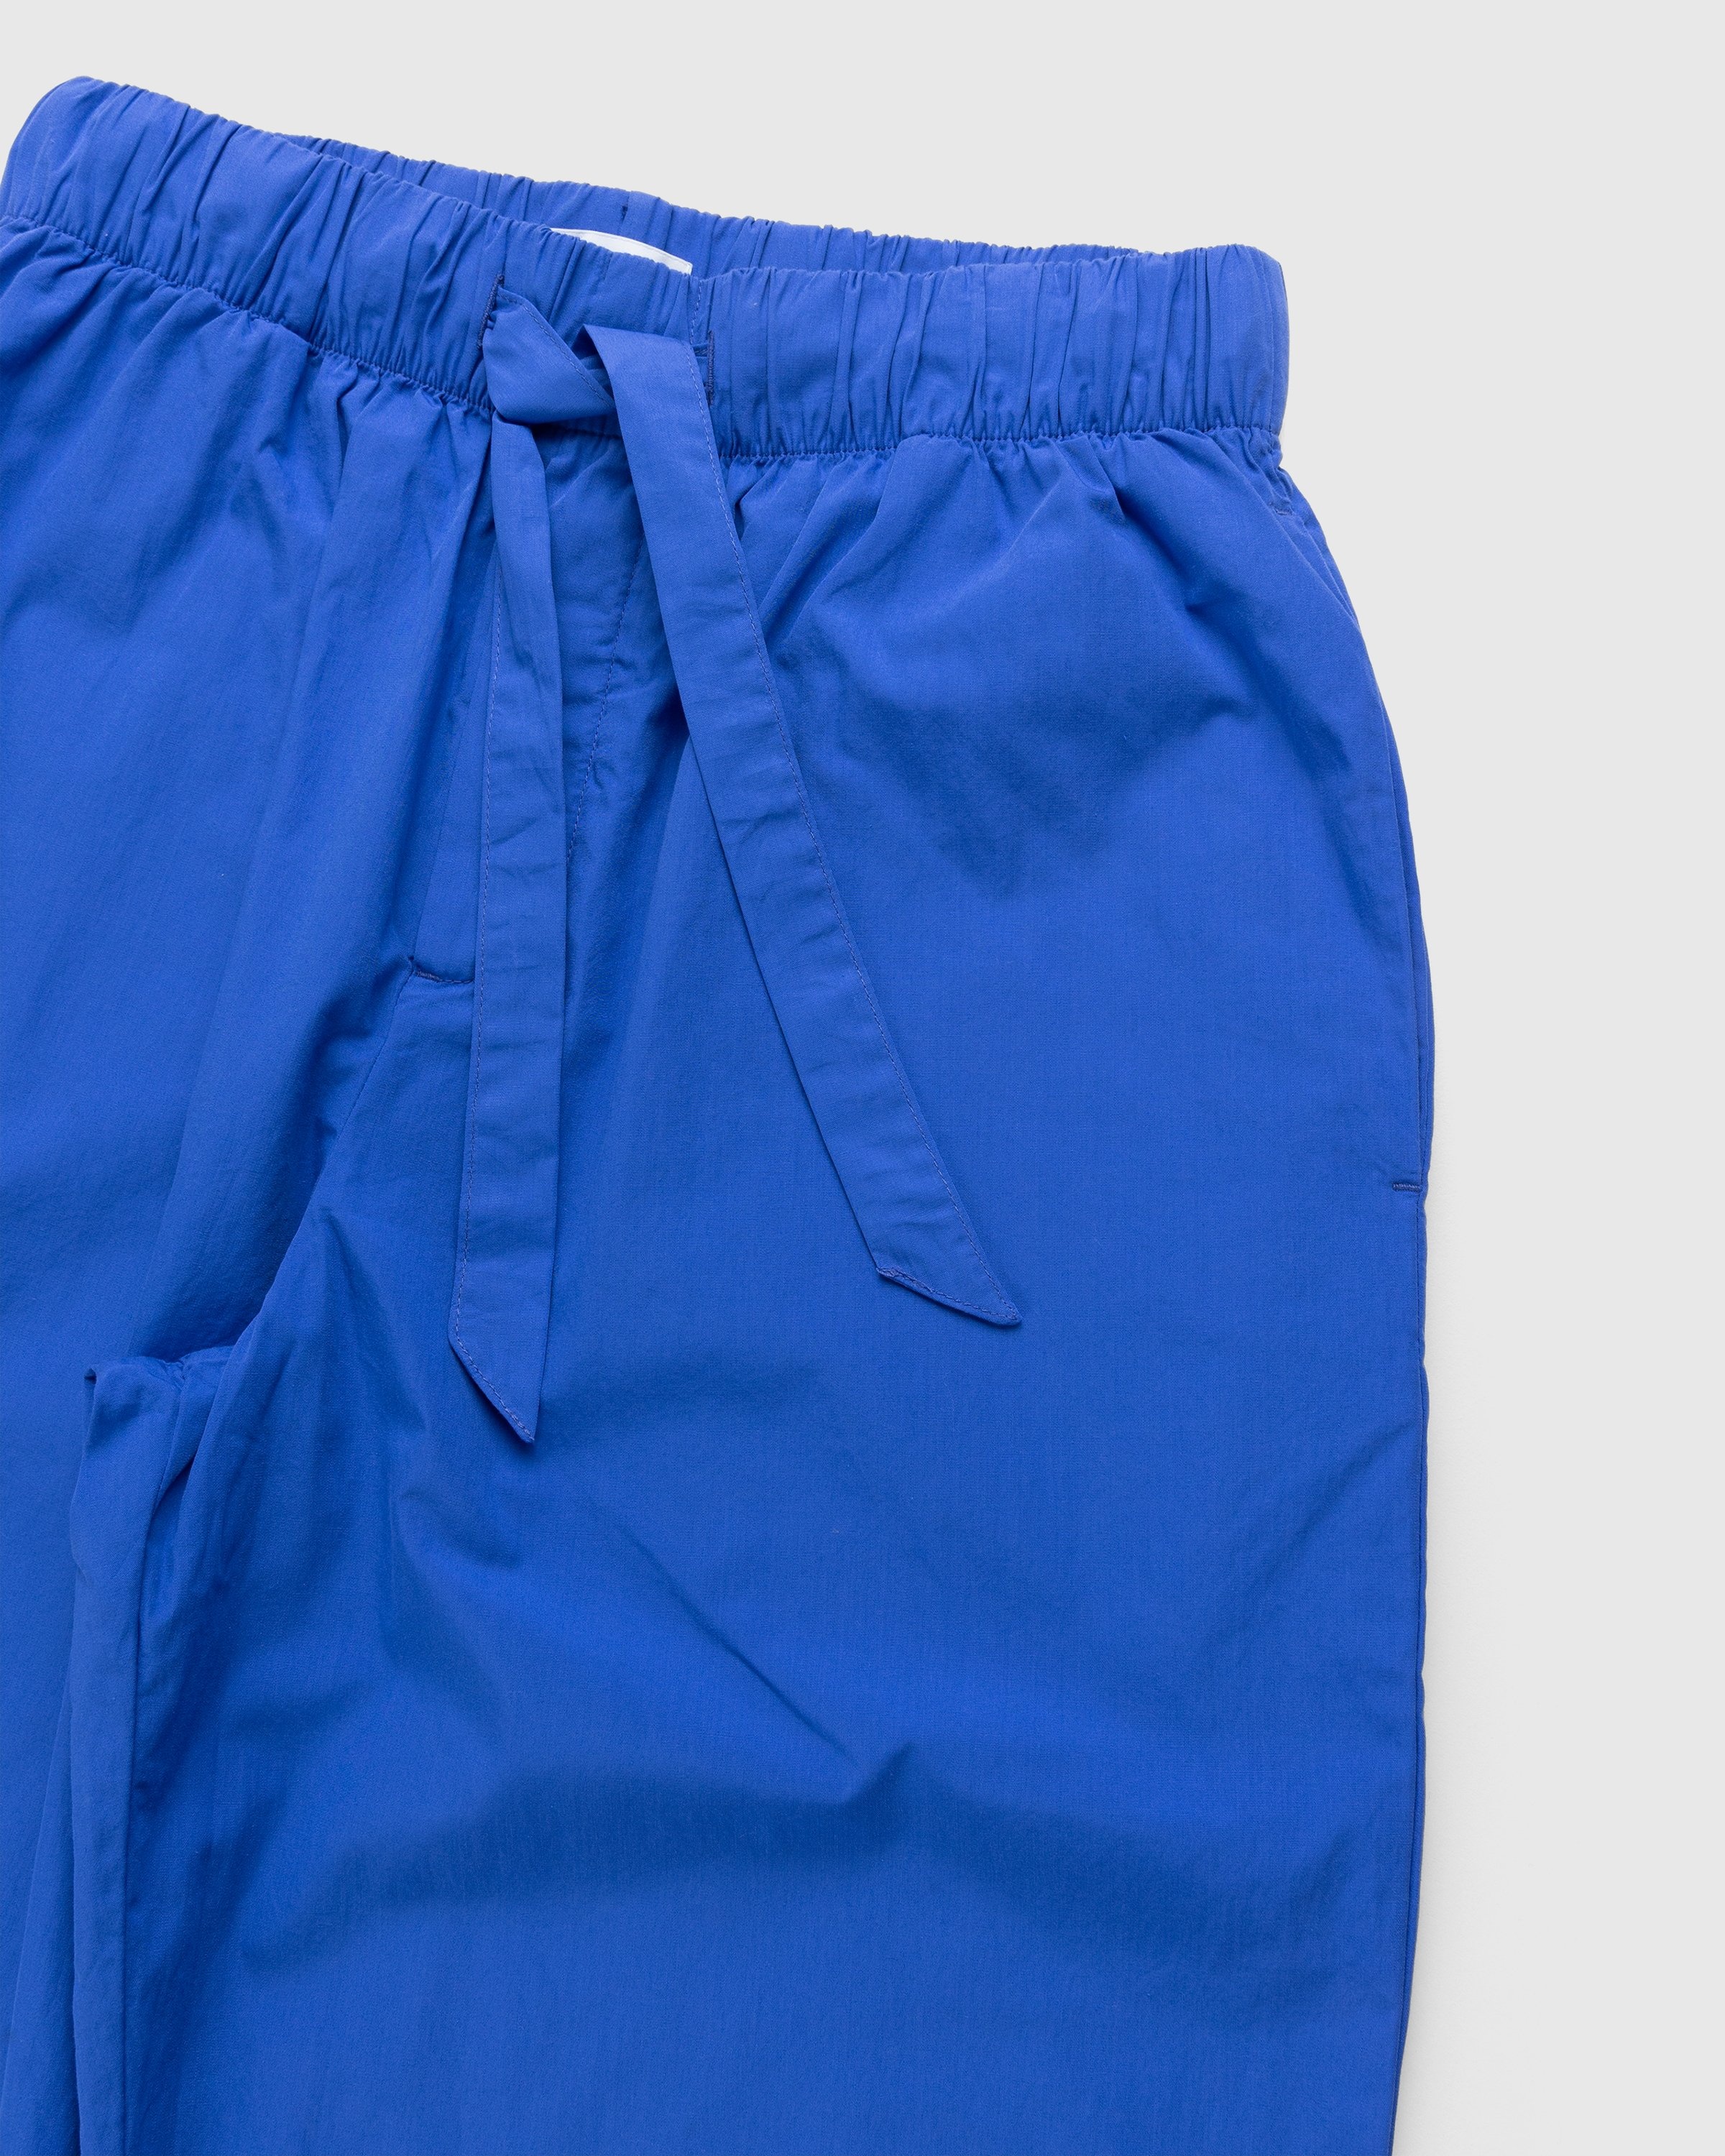 Tekla – Cotton Poplin Pyjamas Pants Royal Blue - Loungewear - Blue - Image 4